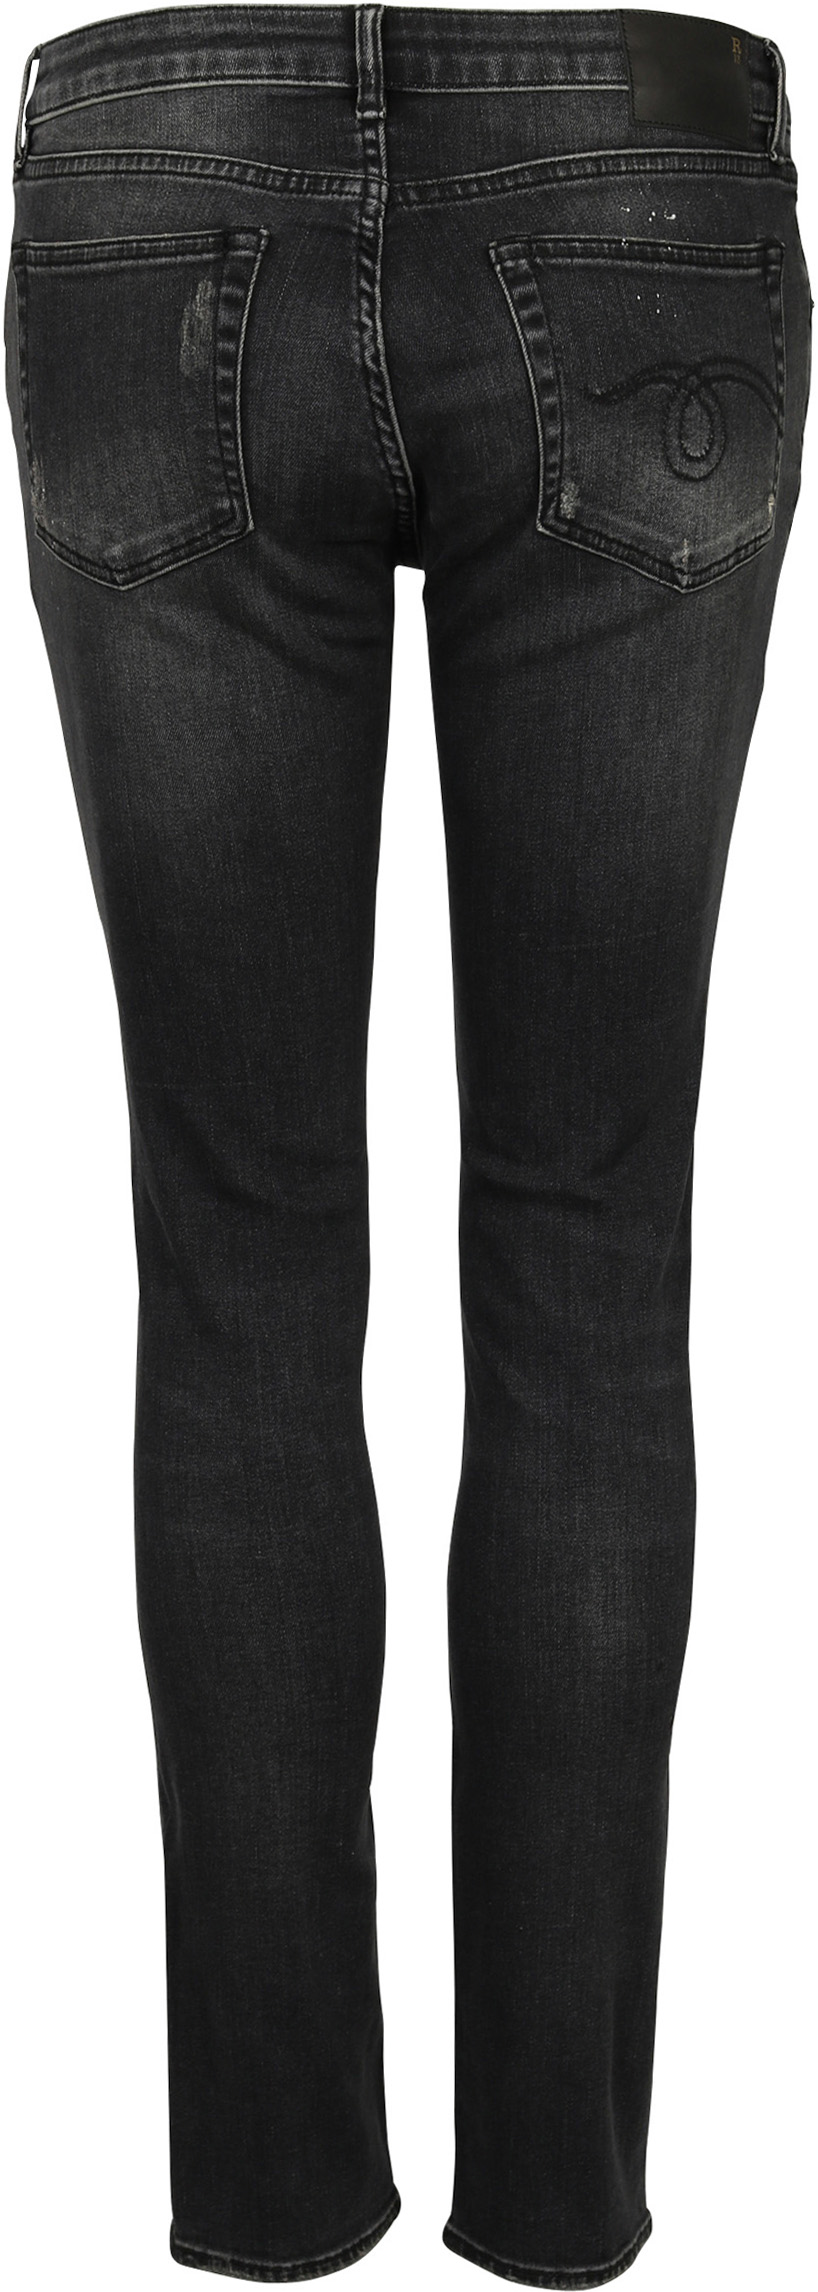 R13 Jeans Kate Skinny Orion Black Wash 28